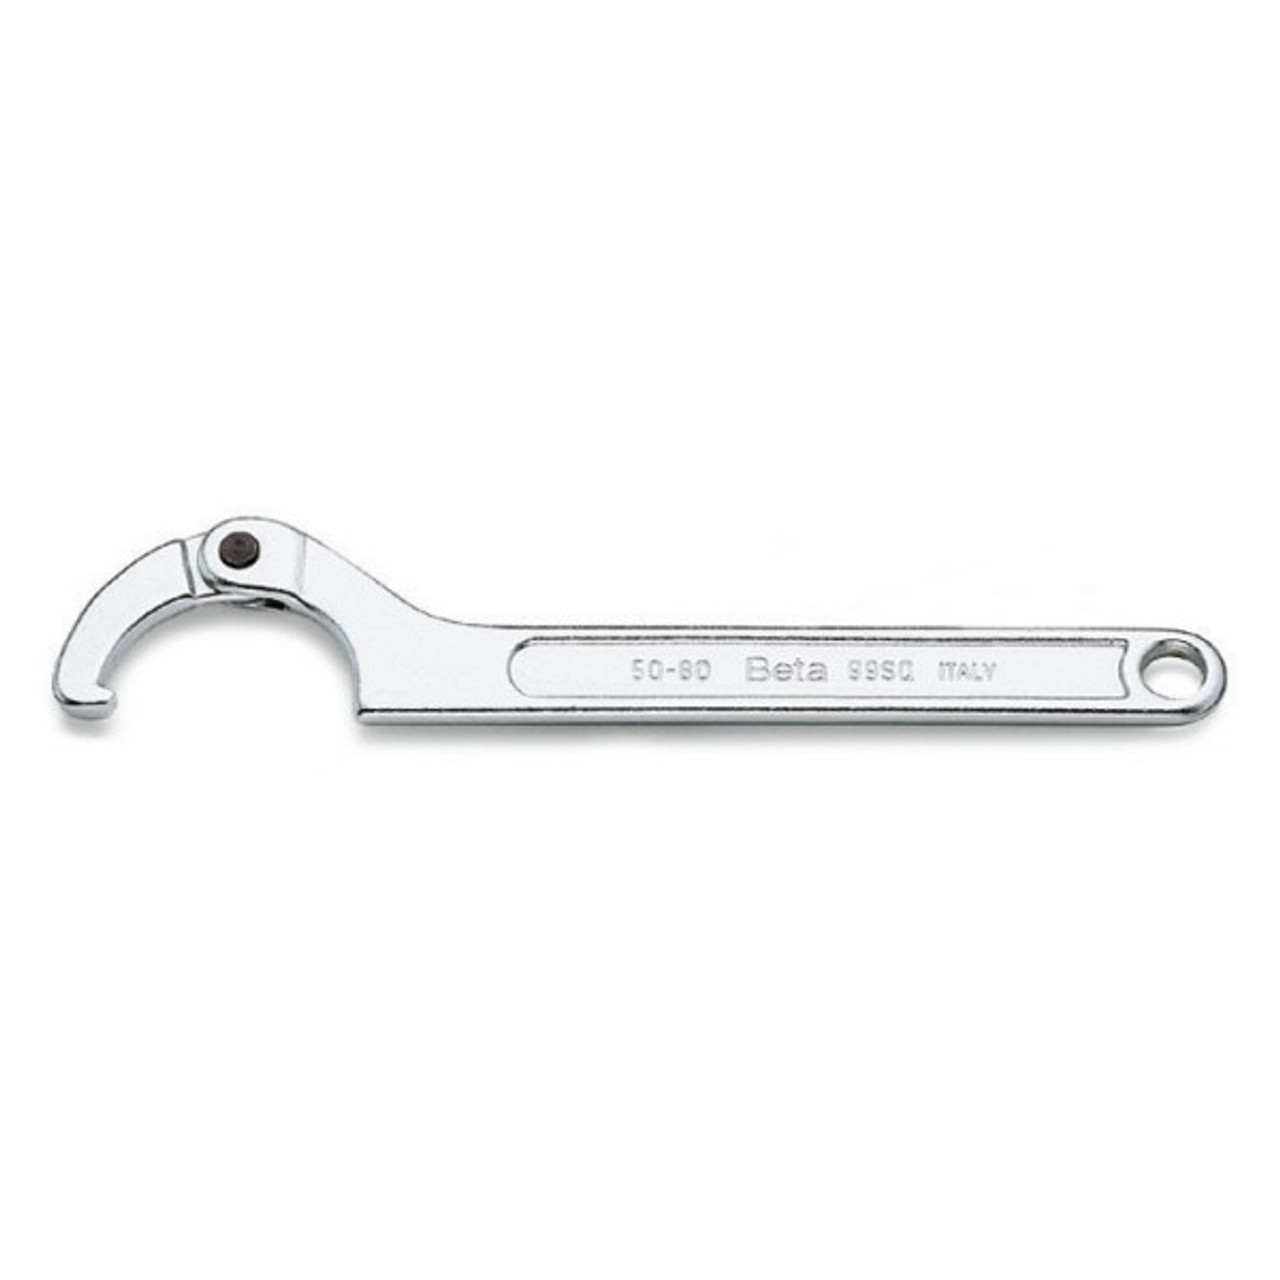 Beta Tools 35-50 Adjustable-Hook Spanner Wrench - 990235